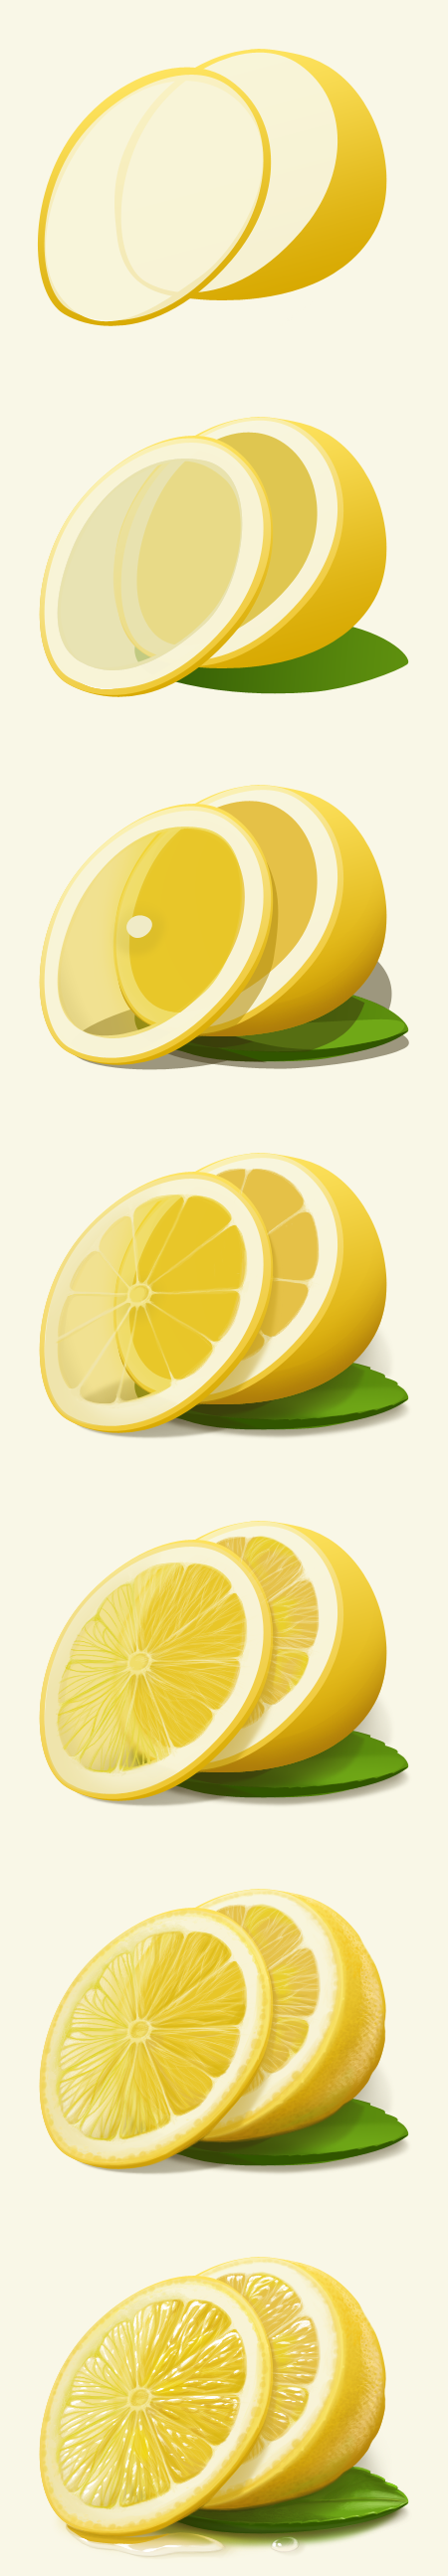 Dribbble - lemon_process.png by Alla Vasilenko